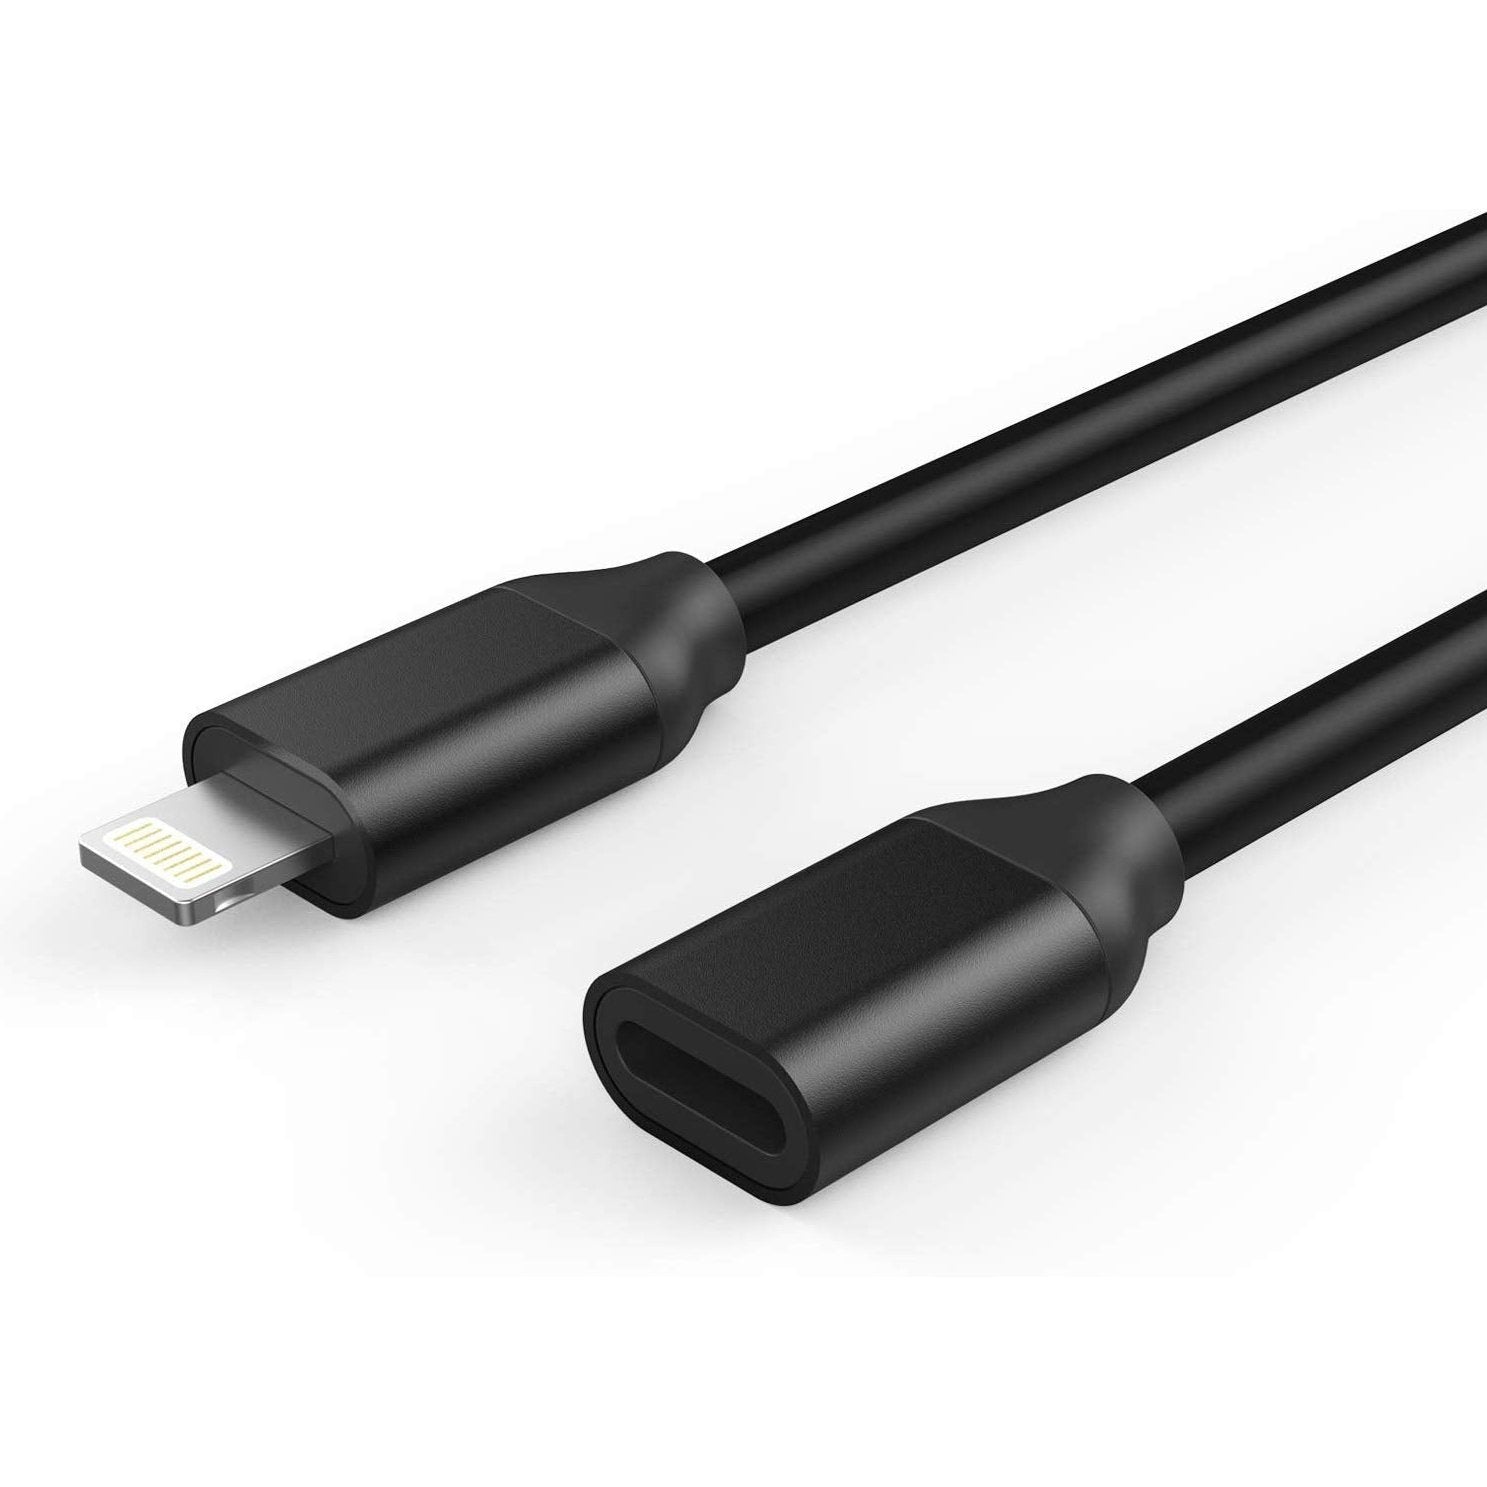 Câbles vidéo CABLING ® Lightning à Câble HDMI, Mâle à Mâle Apple 8